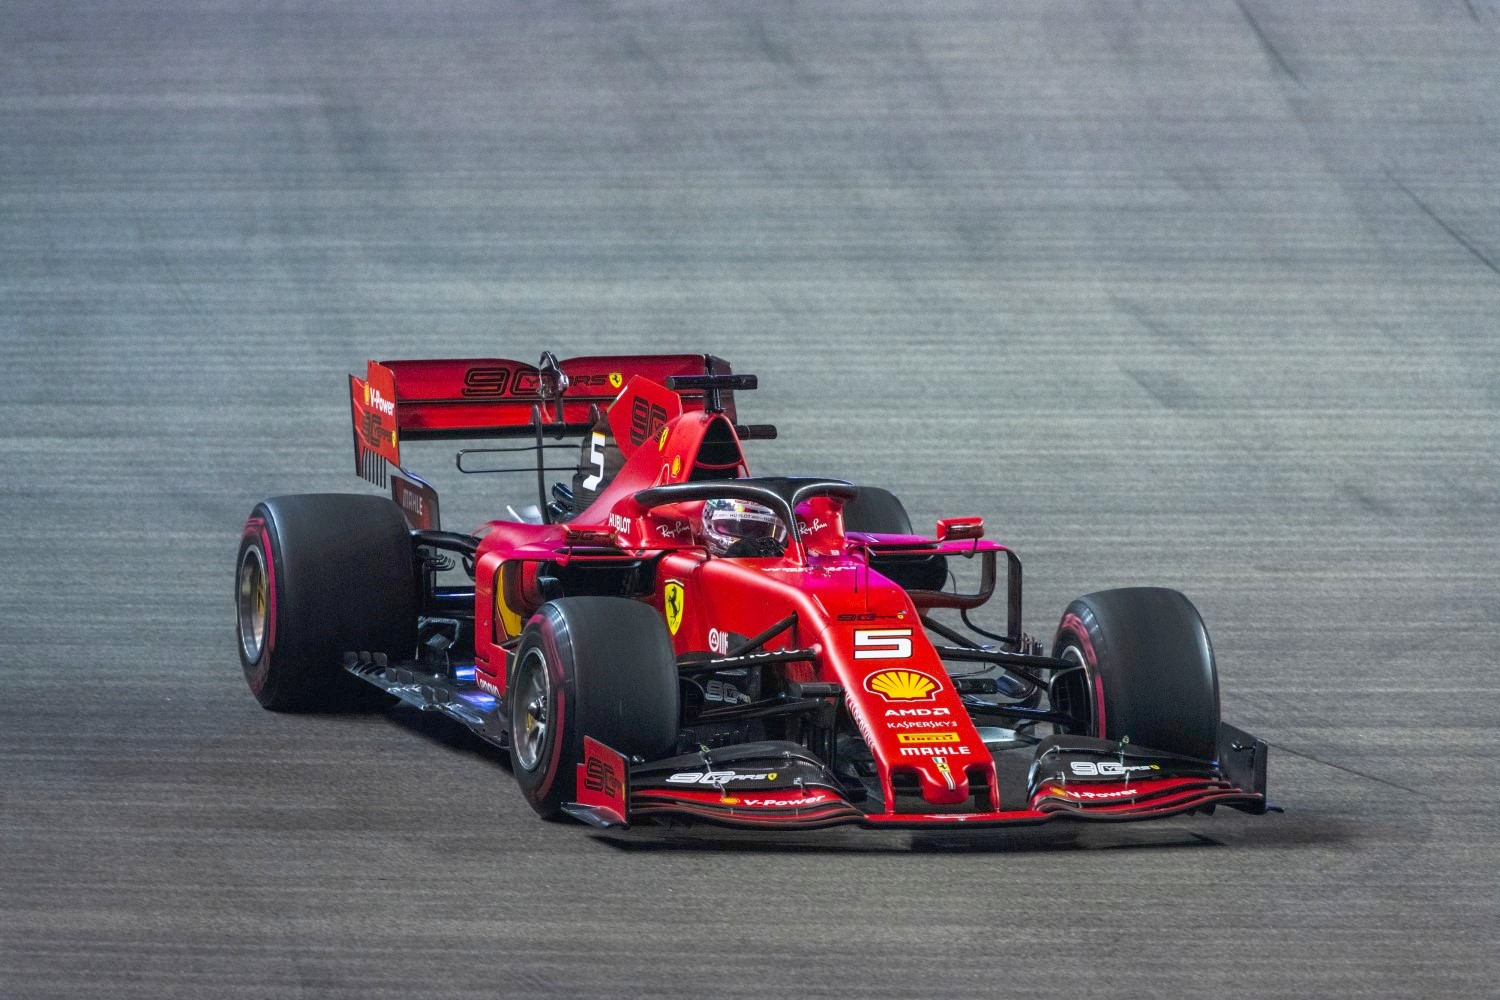 Vettel comfortably held off his Ferrari teammate to win in Singapore